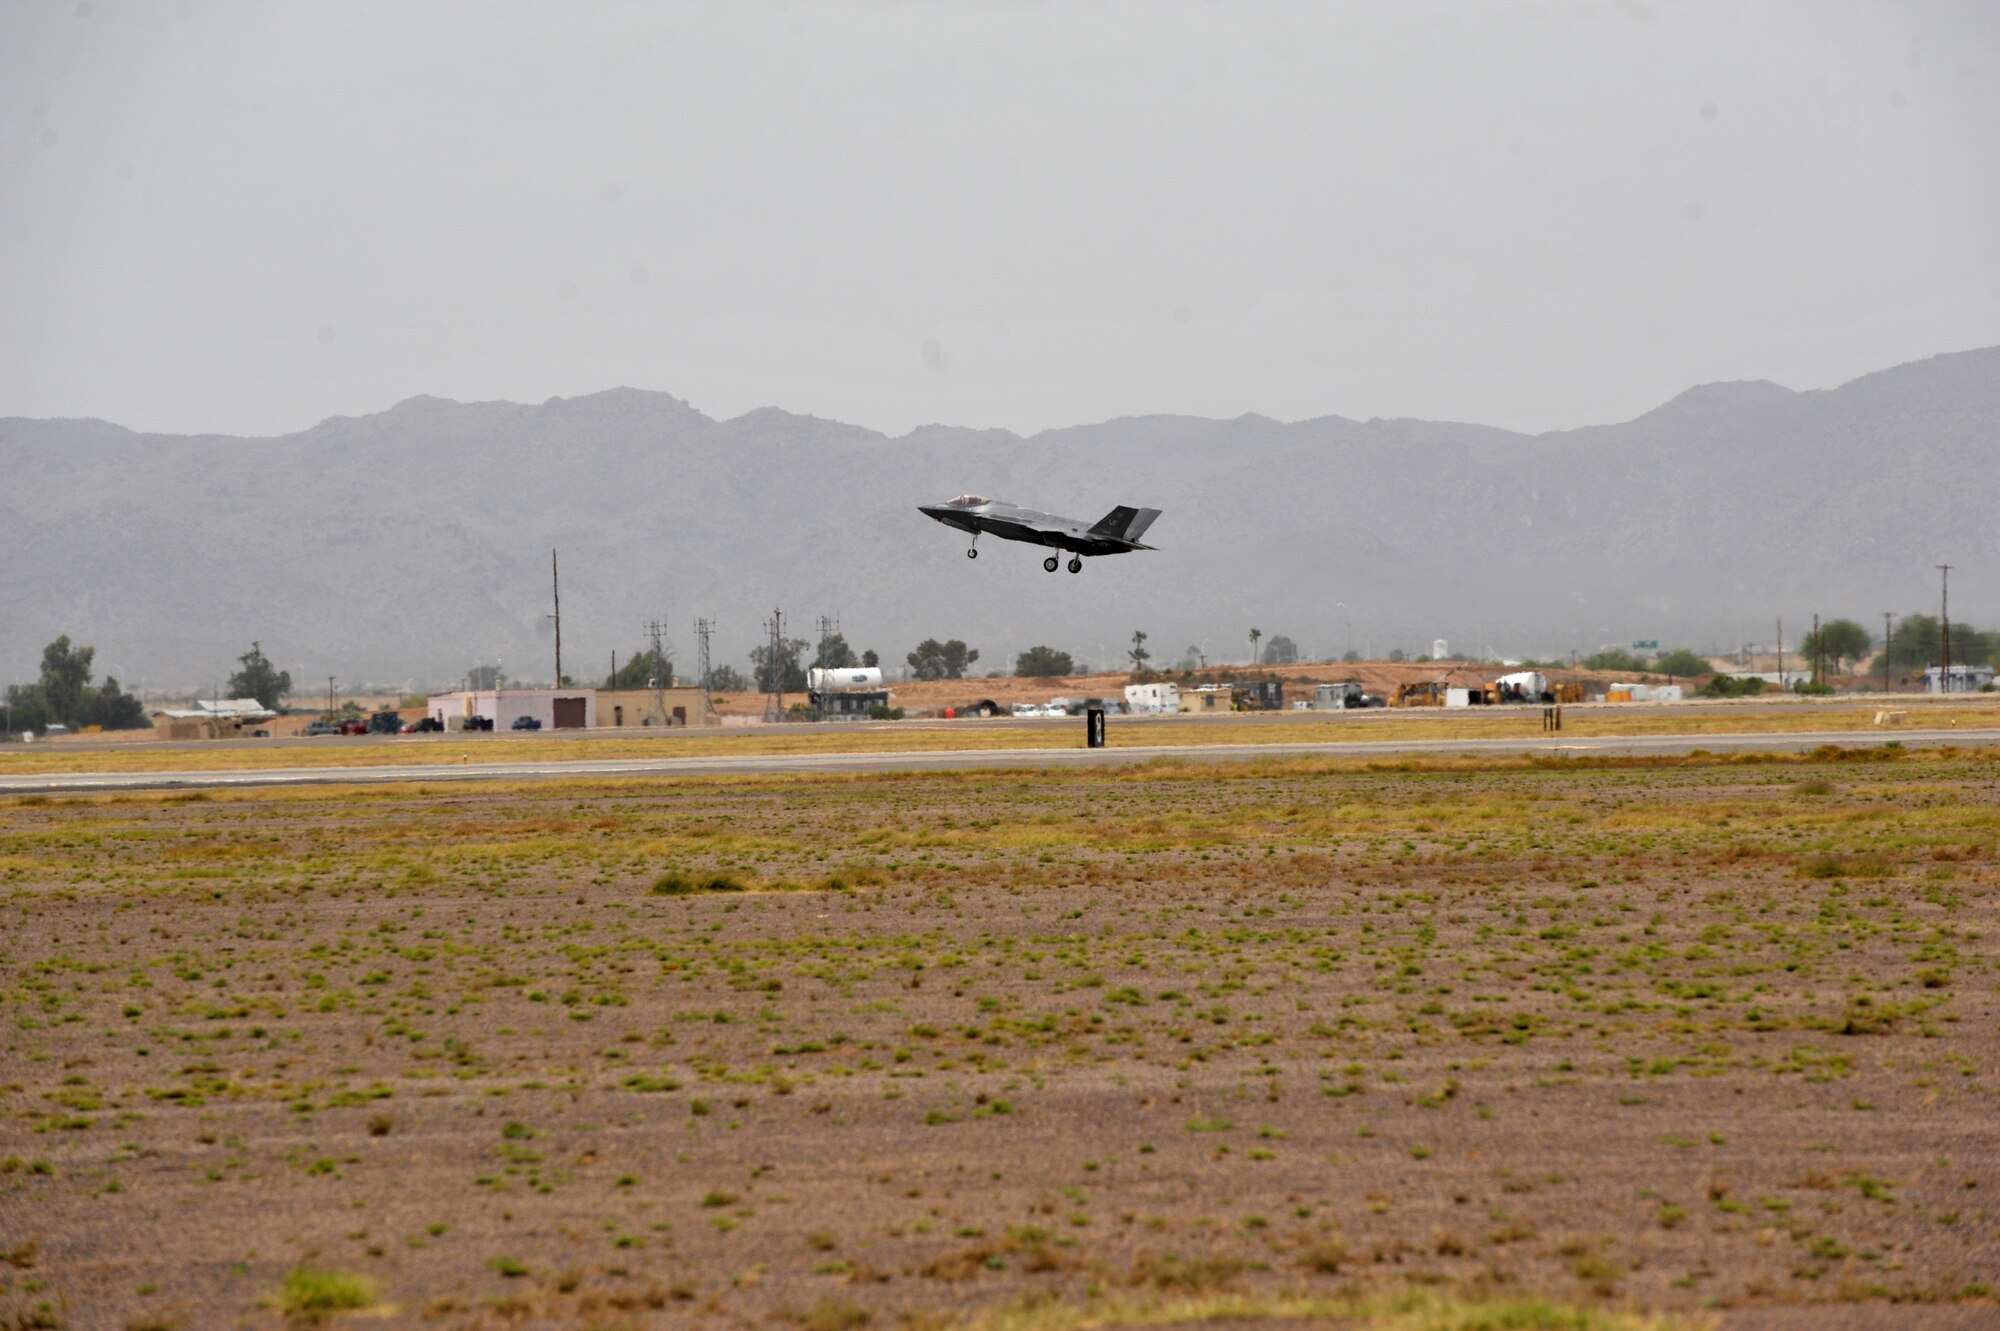 An F-35 Lightning II prepares to land at Luke Air Force Base May 6, 2014. (U.S. Air Force photo by Senior Airman Jason Colbert)